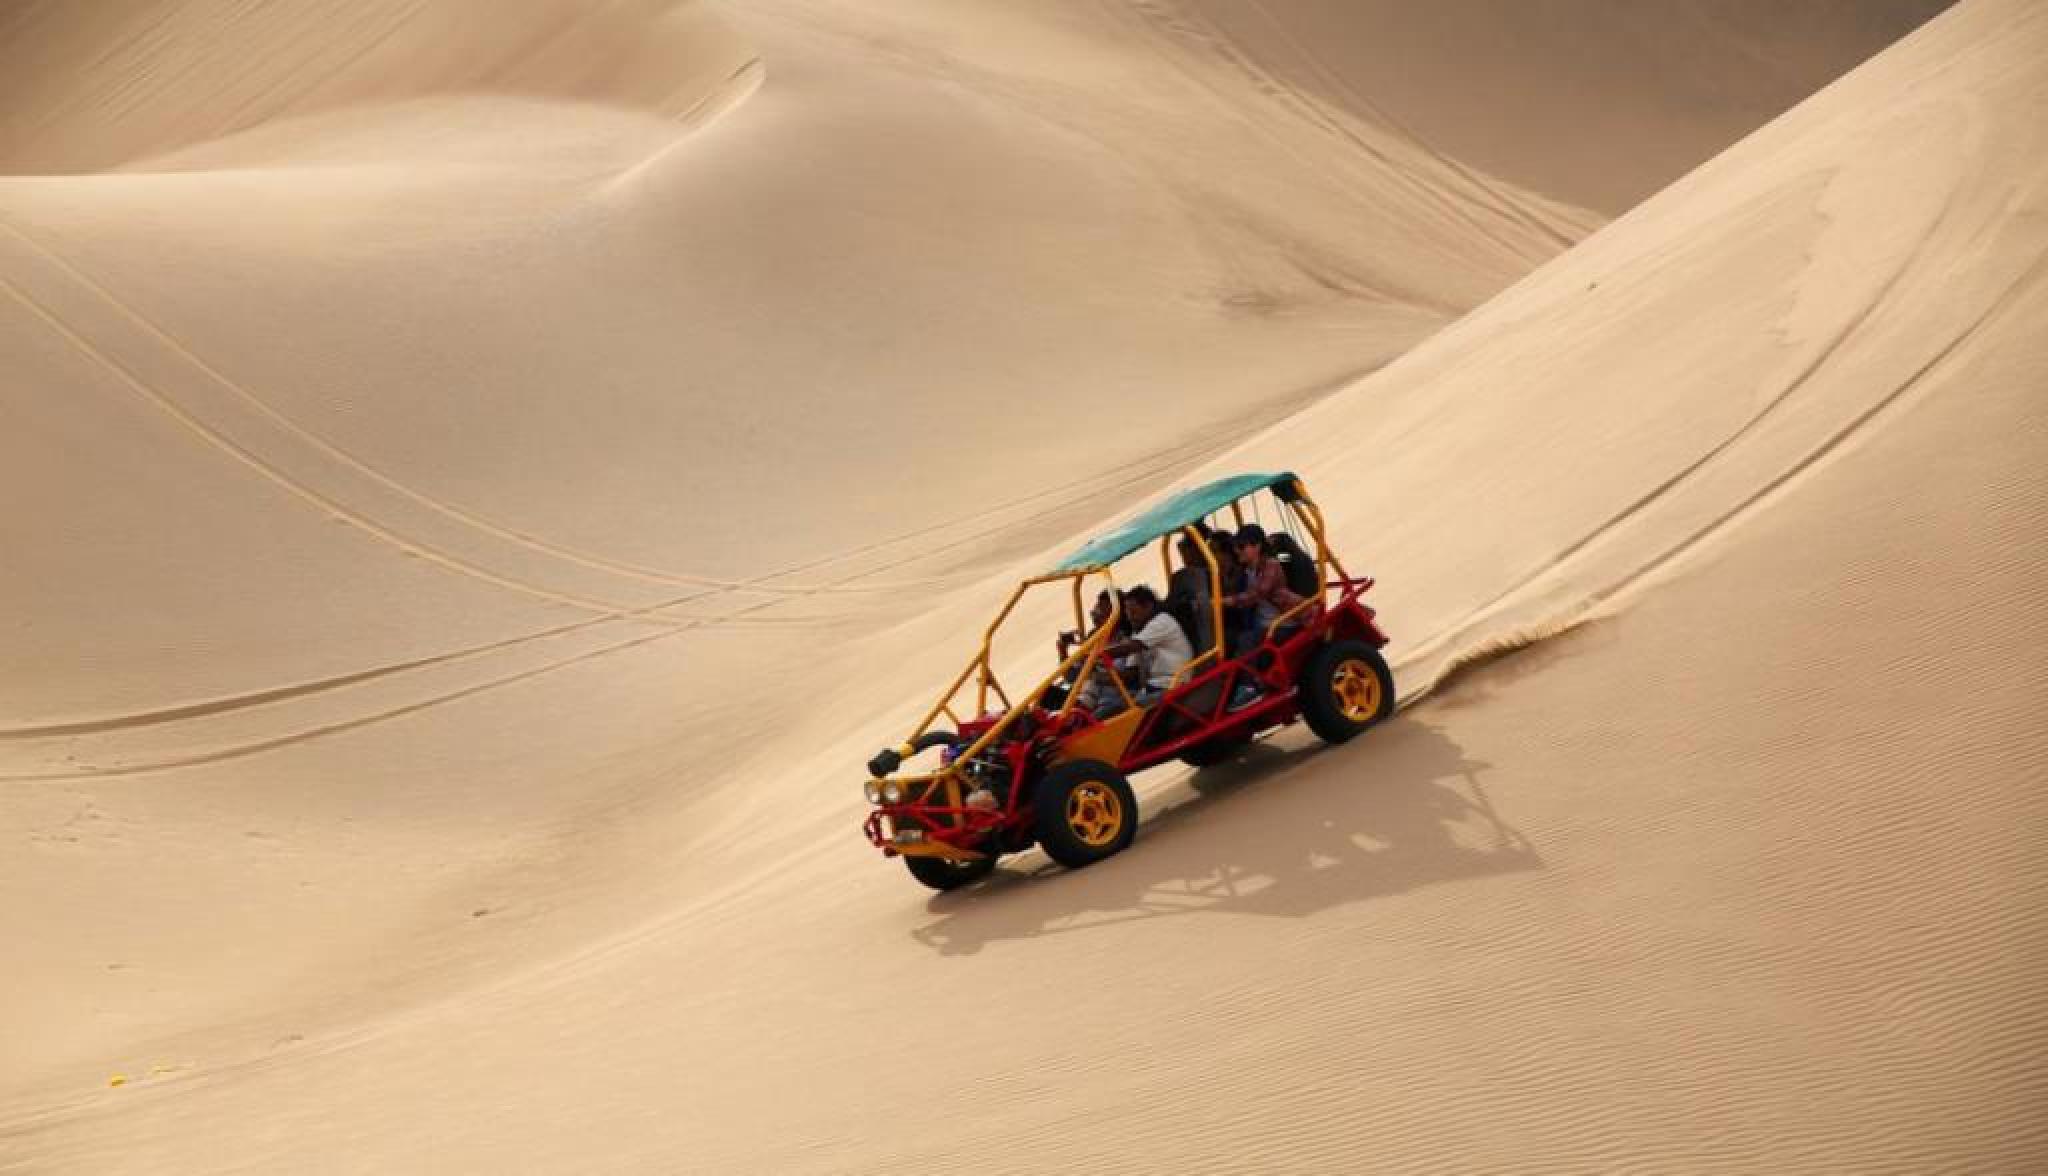 huacachina dune buggy tour